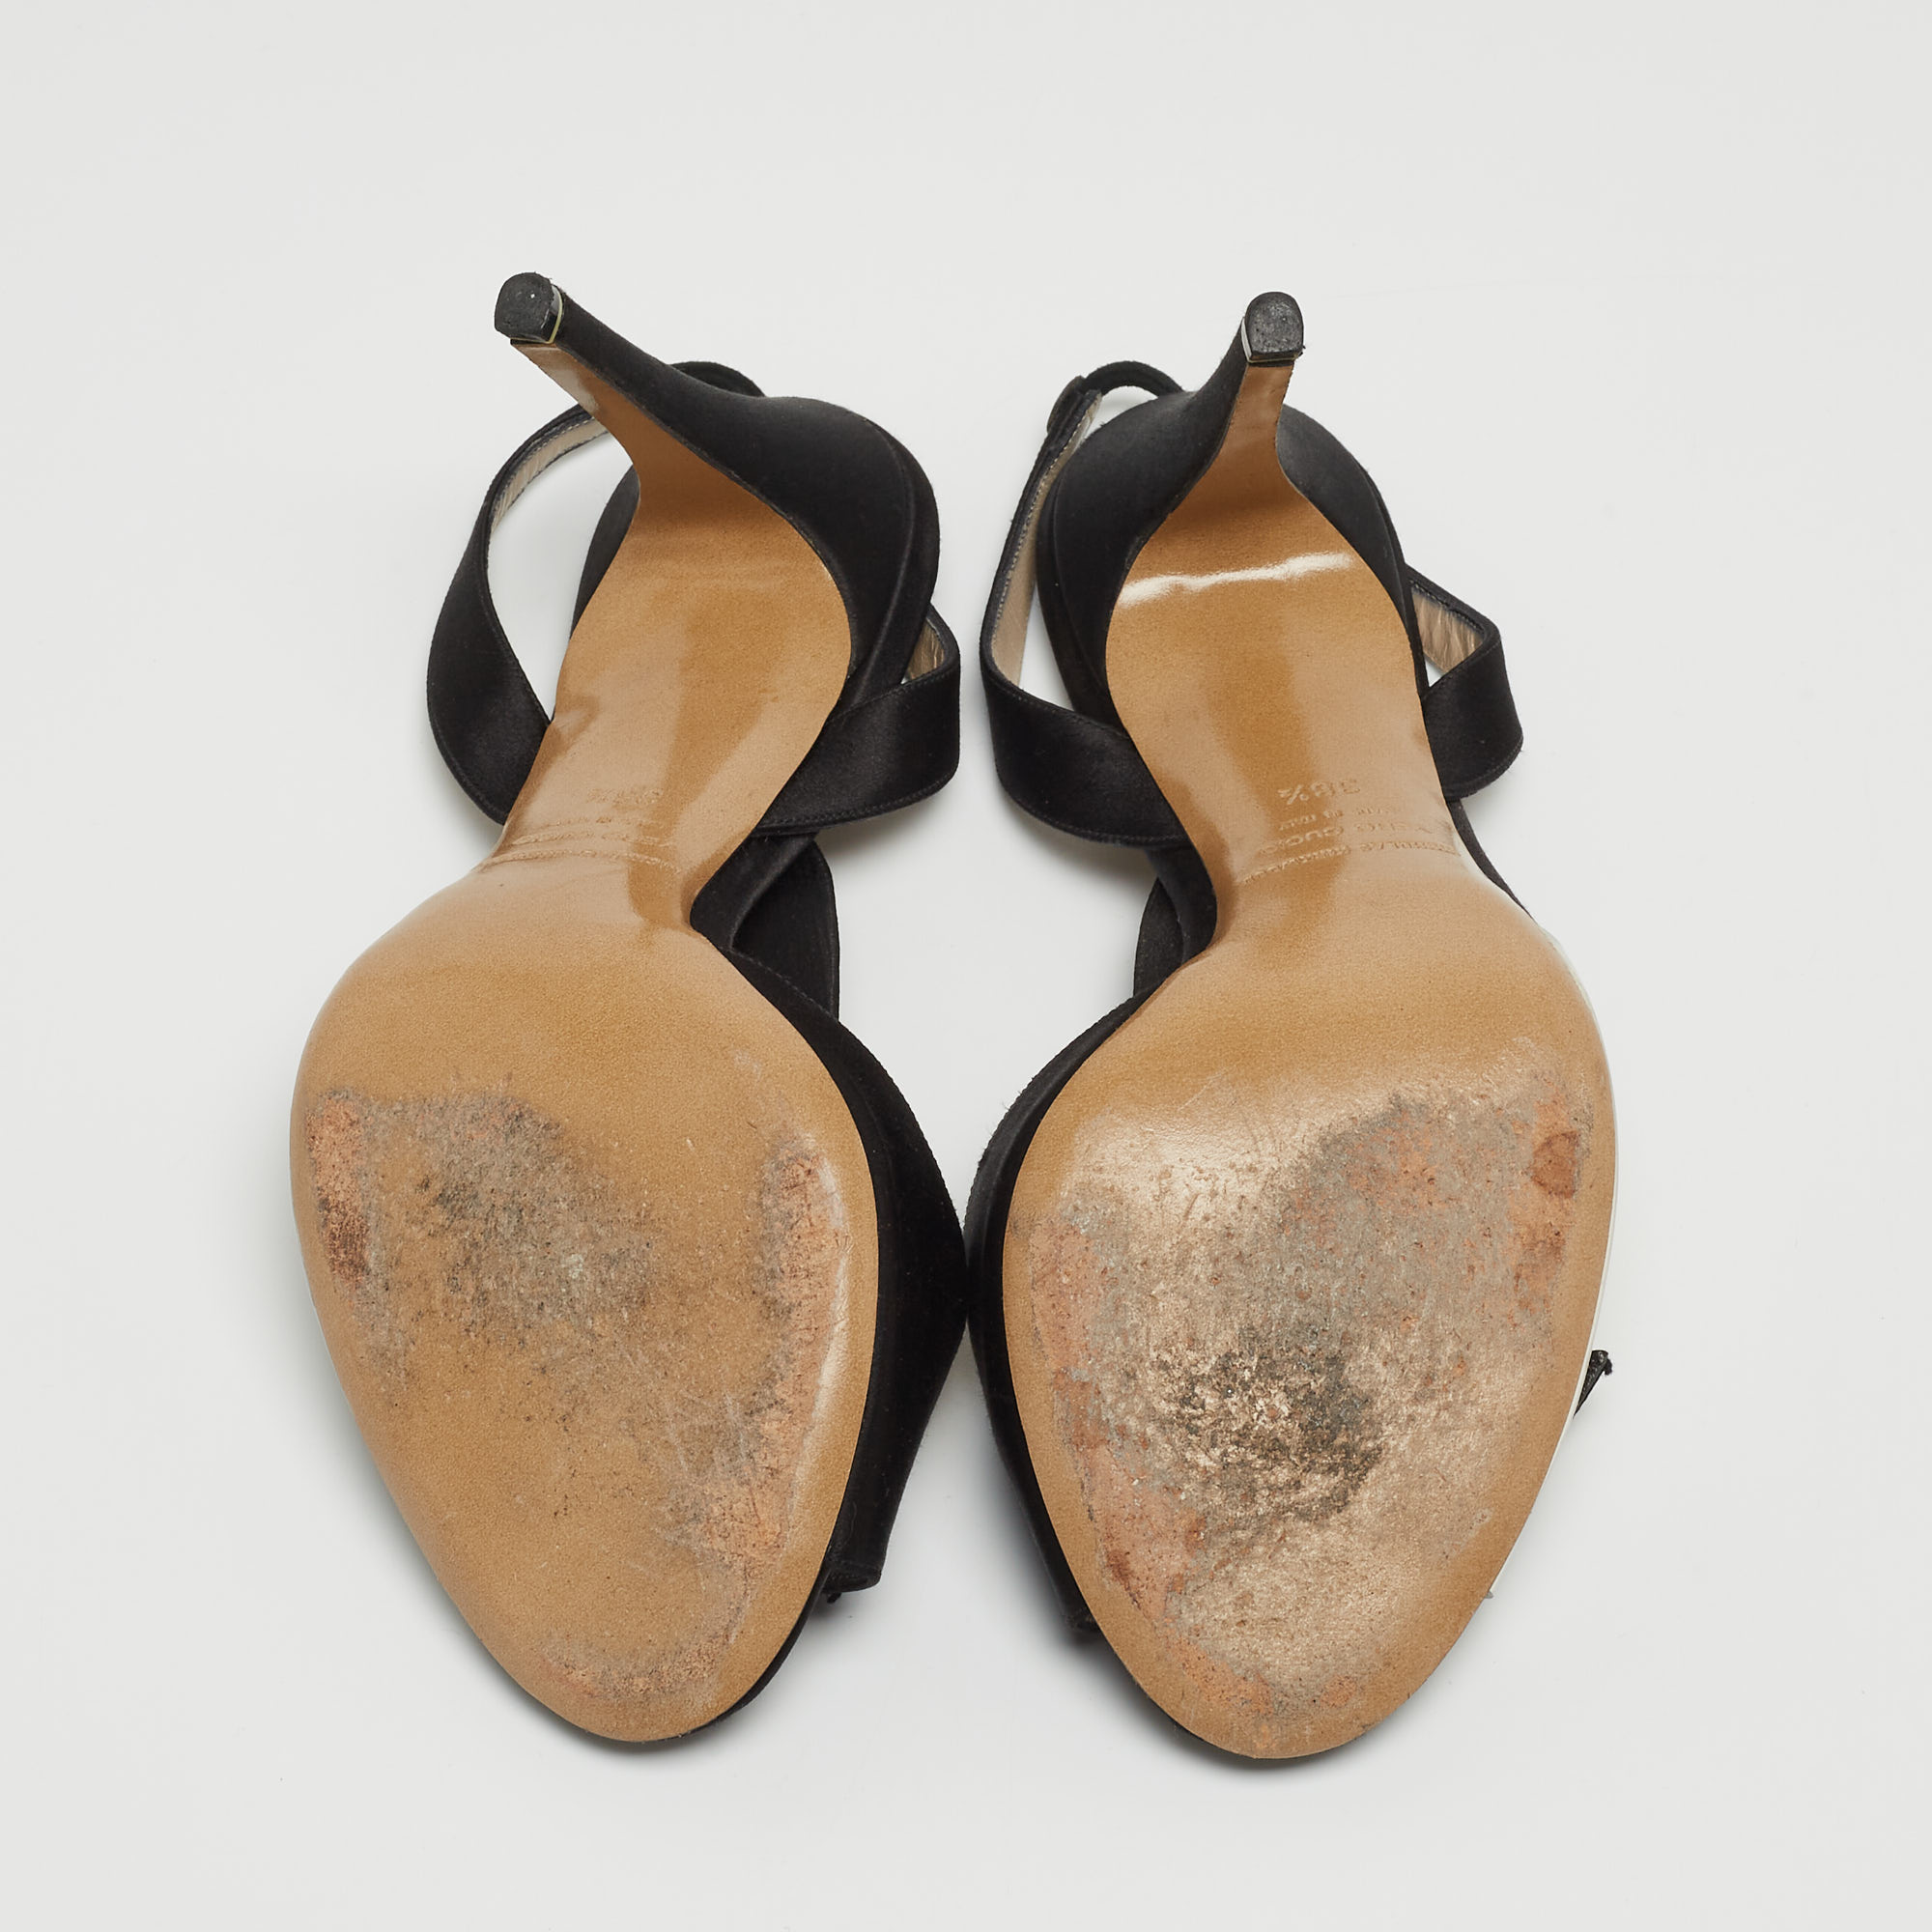 Nicholas Kirkwood Black Satin And PVC Ankle Strap Sandals Size 38.5